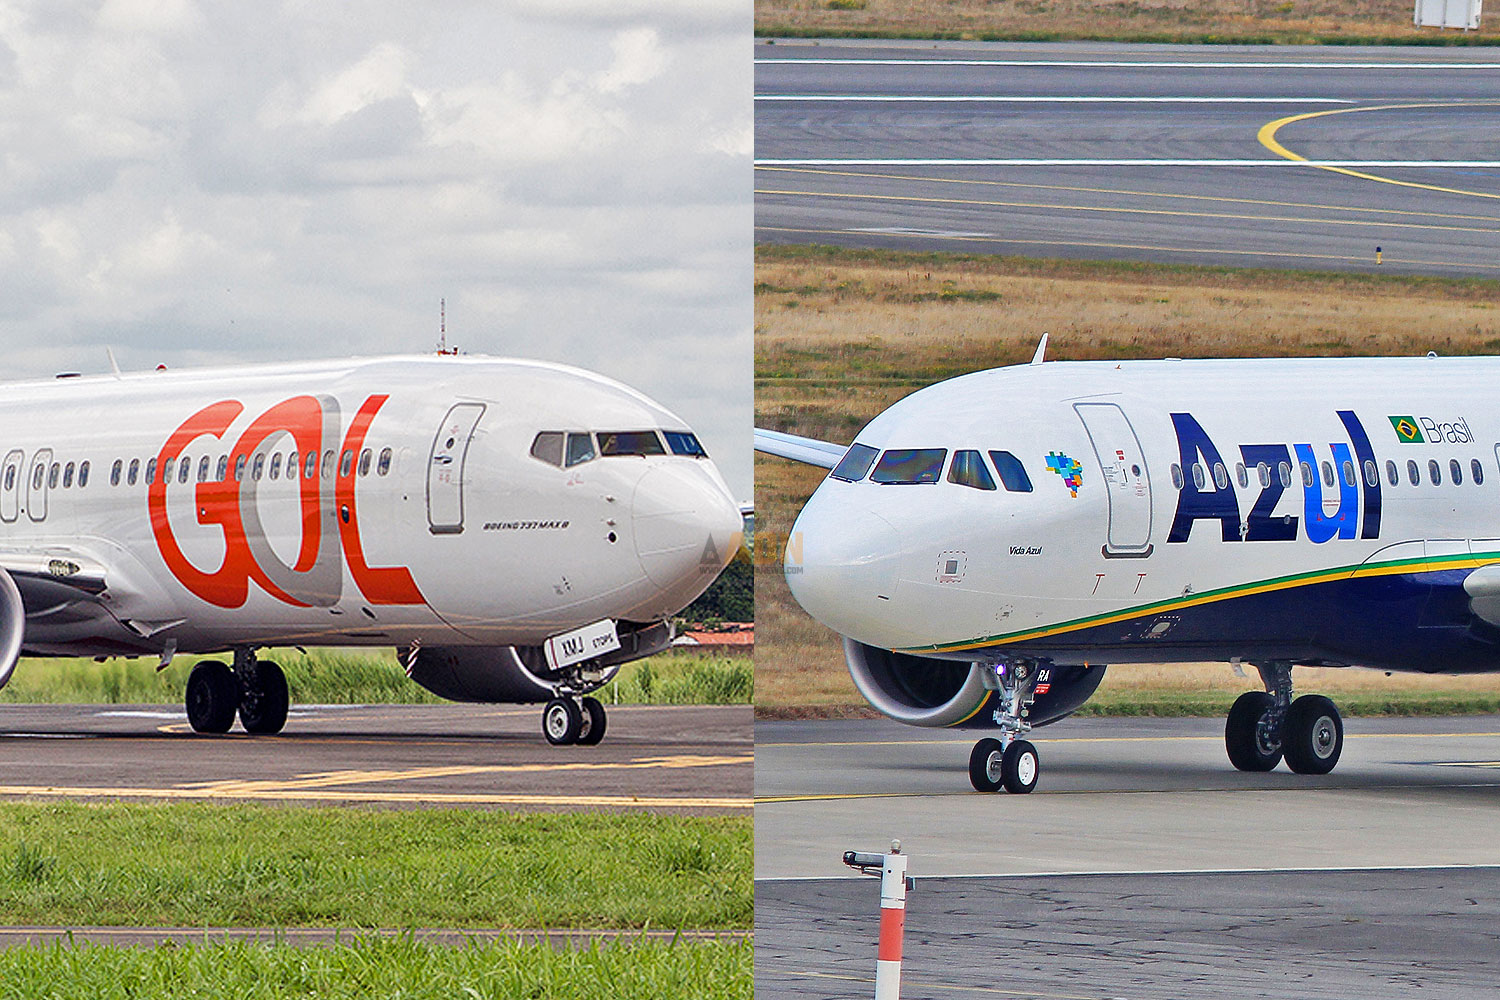 Gol and Azul aircraft